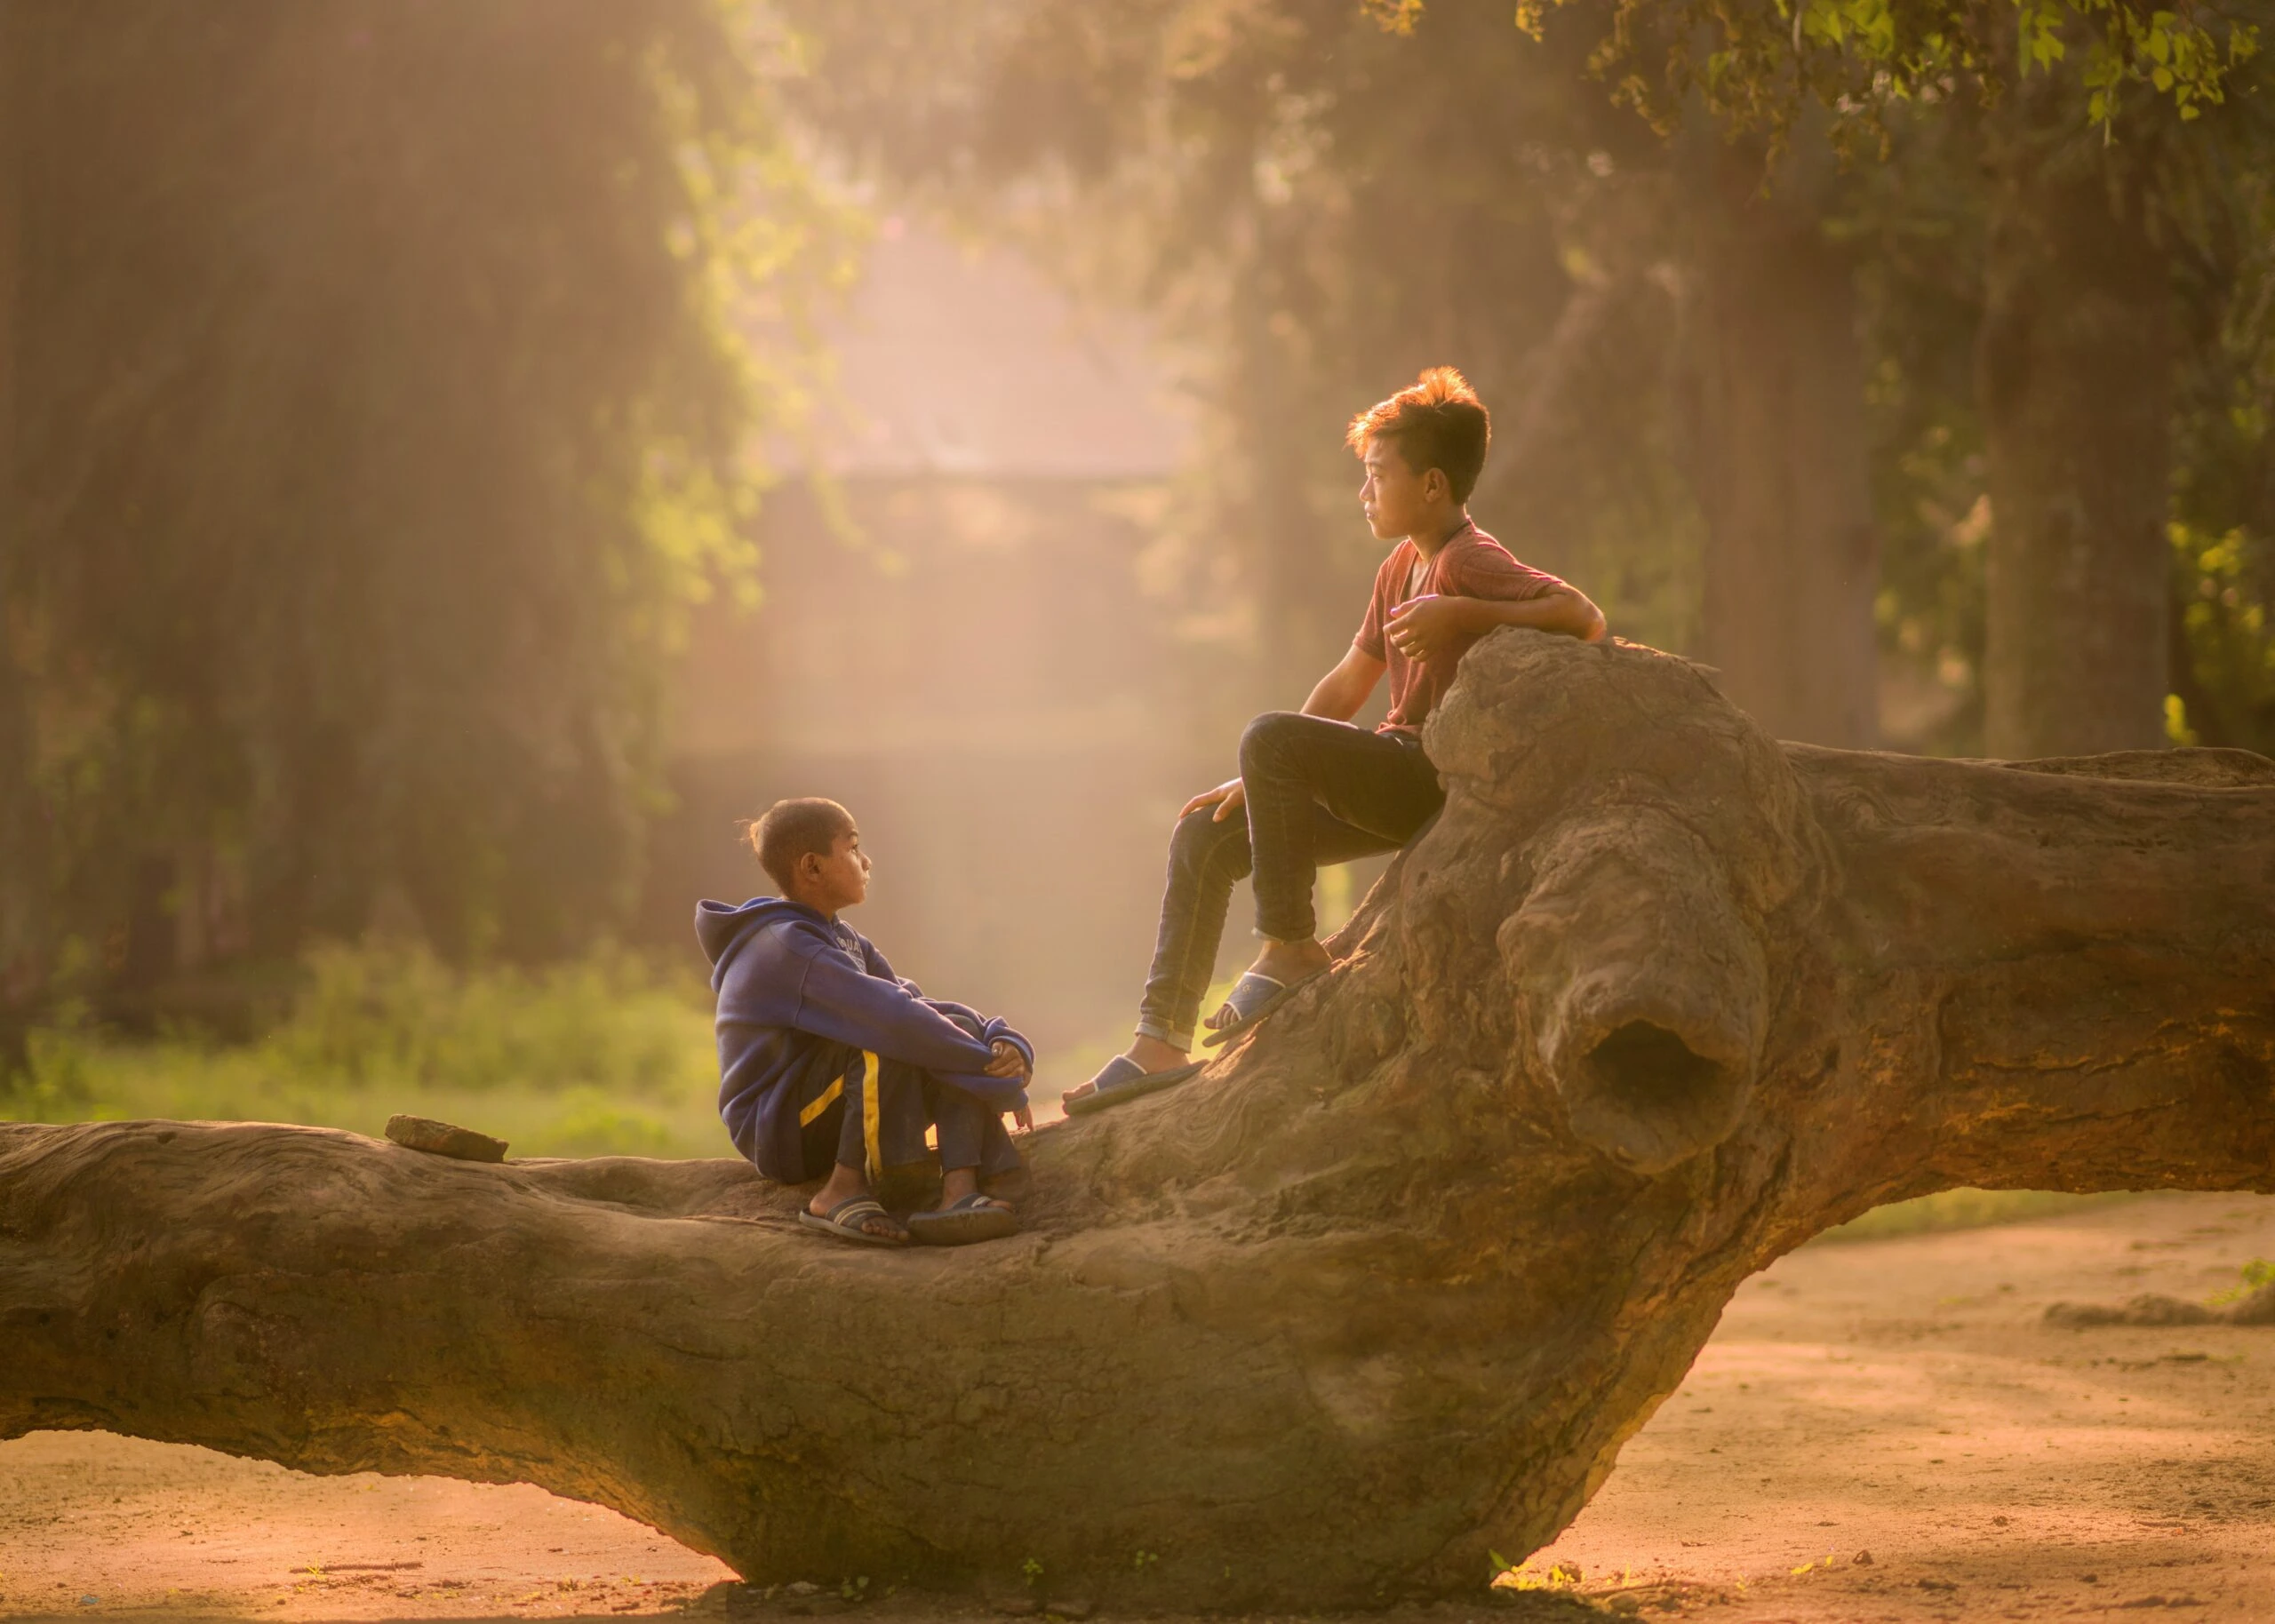 robert-collins-Two boys on deadwood talking sunsplashed in evening light-unsplash